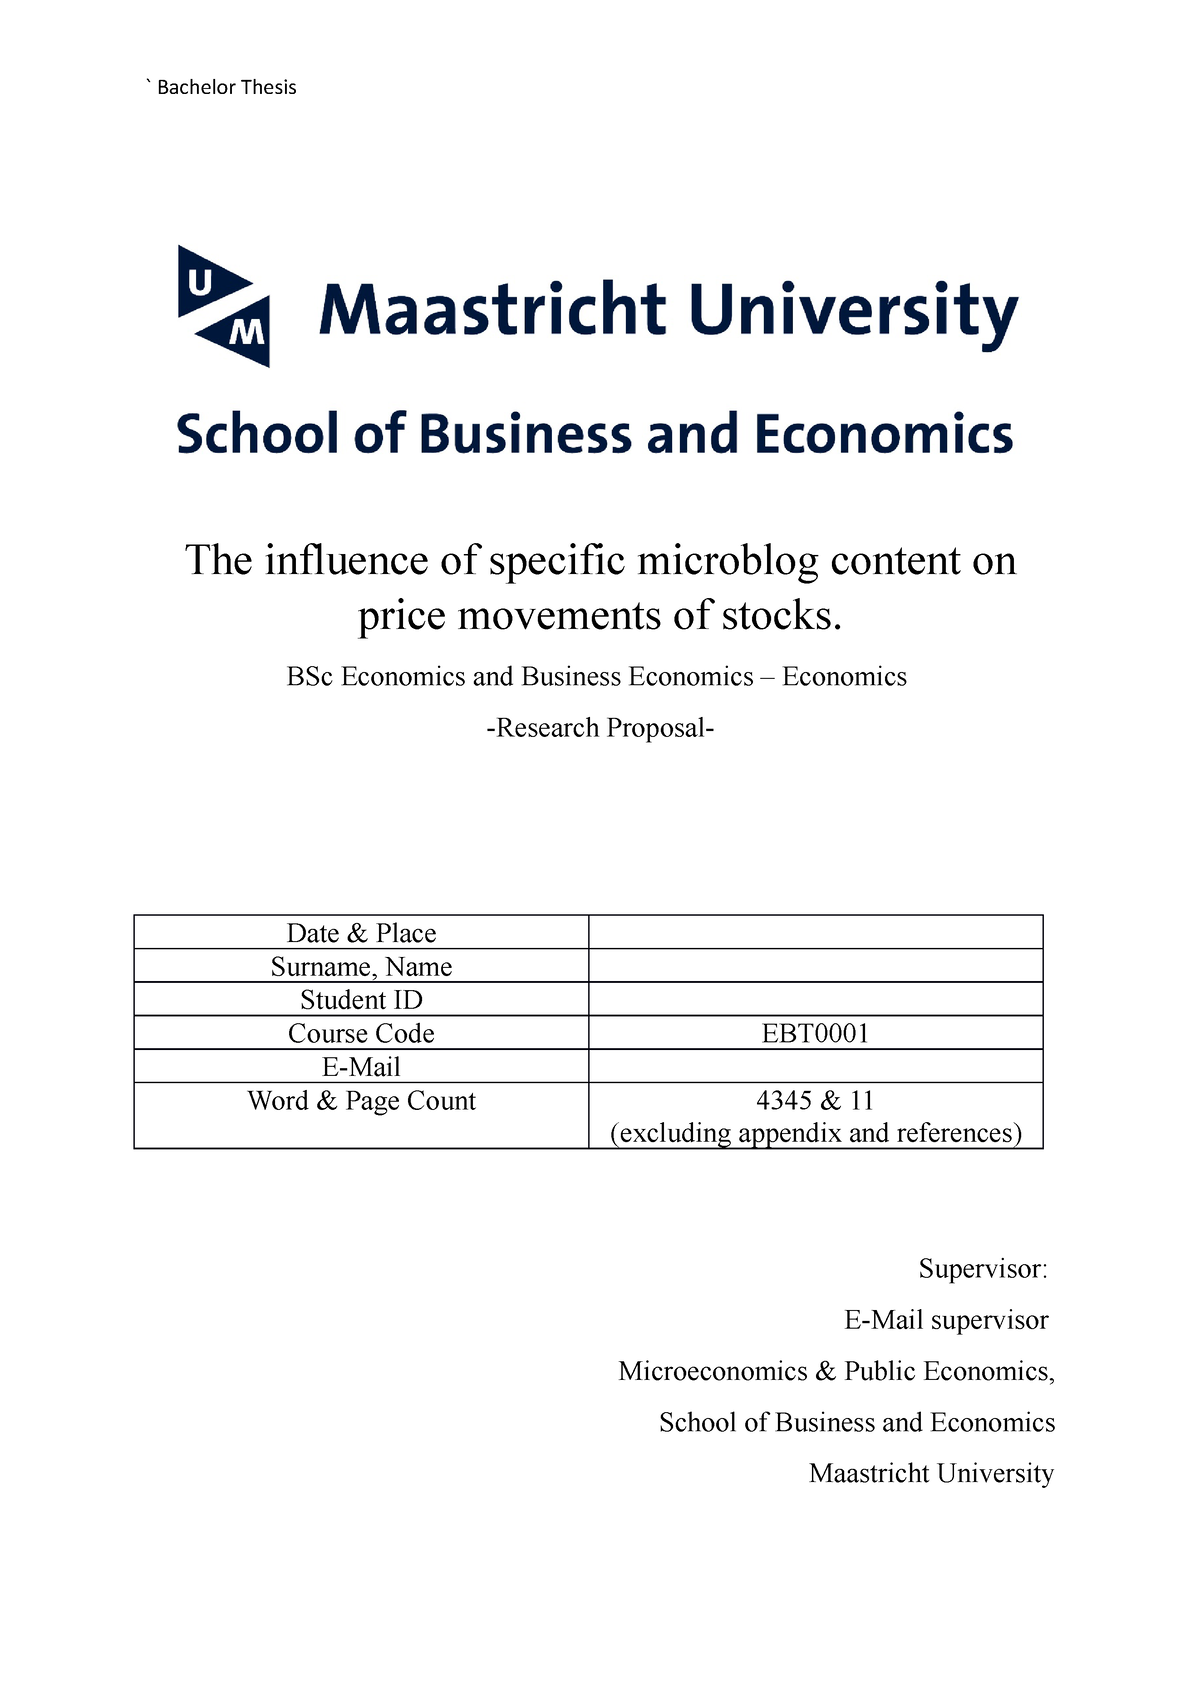 thesis titles about economics